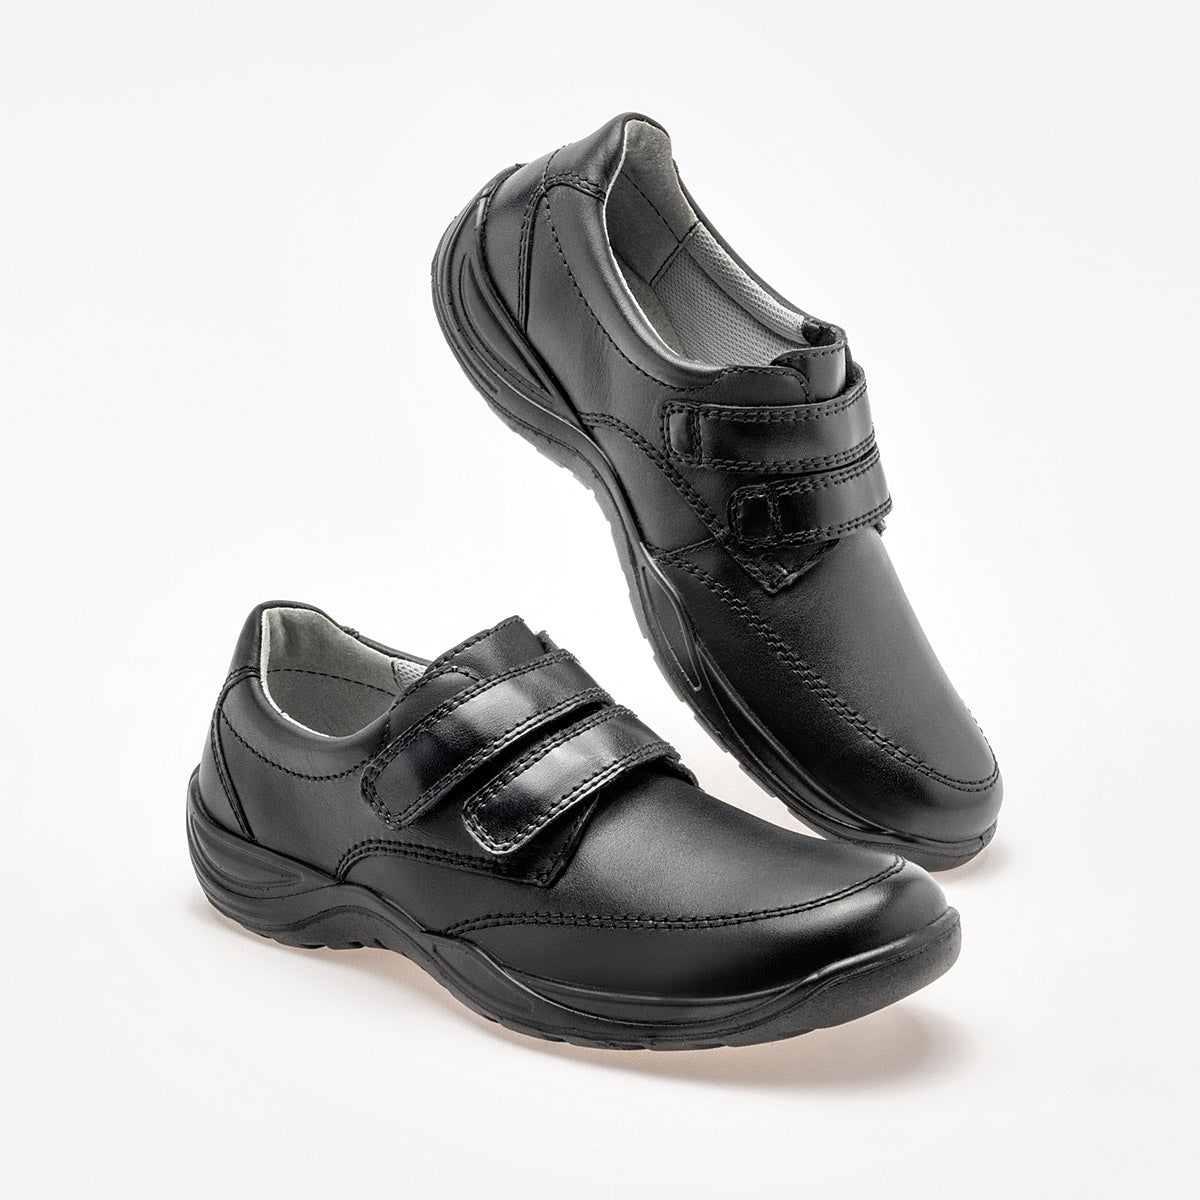 Pakar.com - Mayo: Regalos para mamá | Zapato casual para joven cod-120510